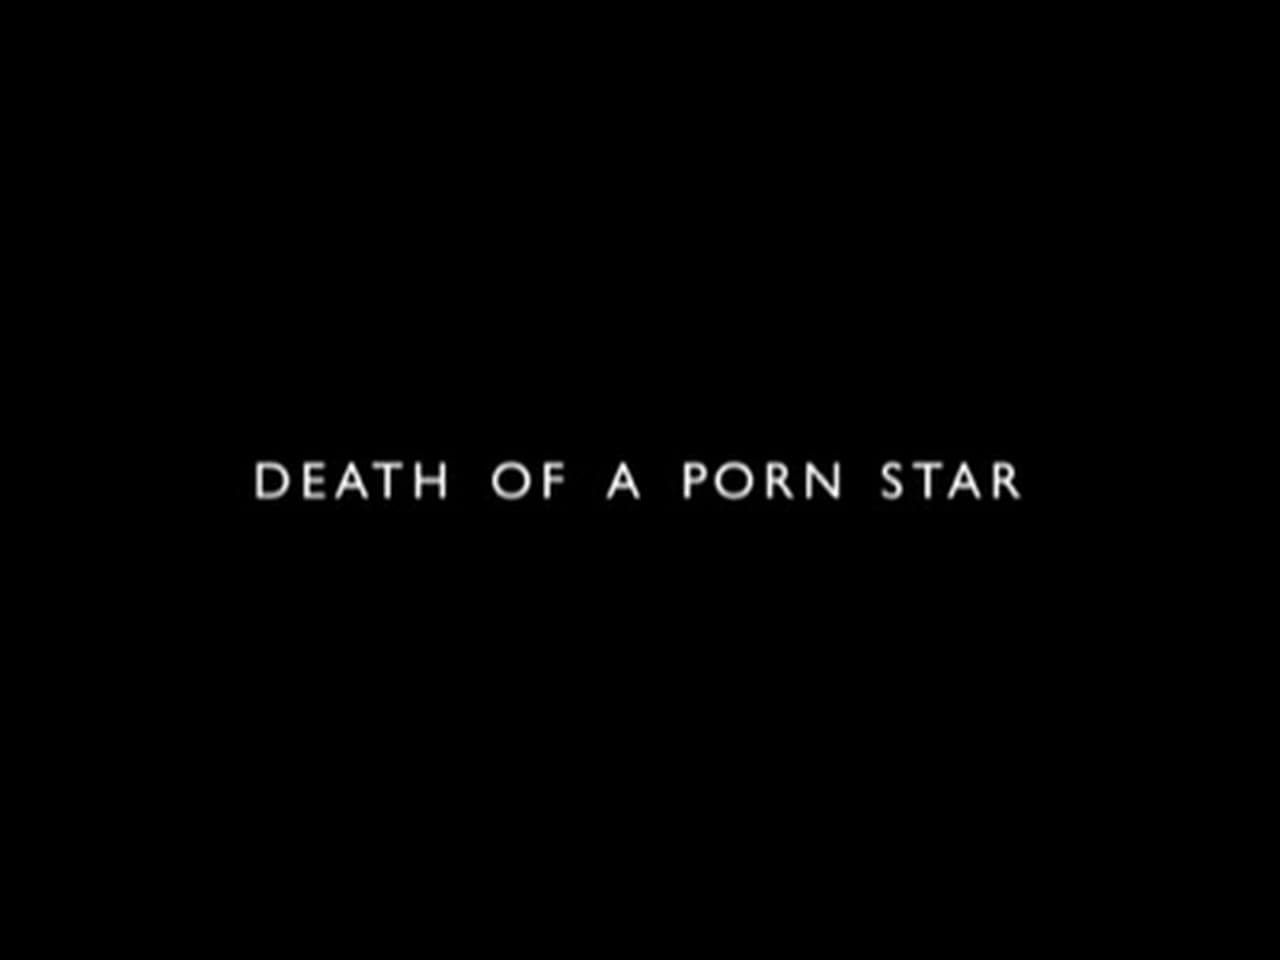 Death of a Porn Star